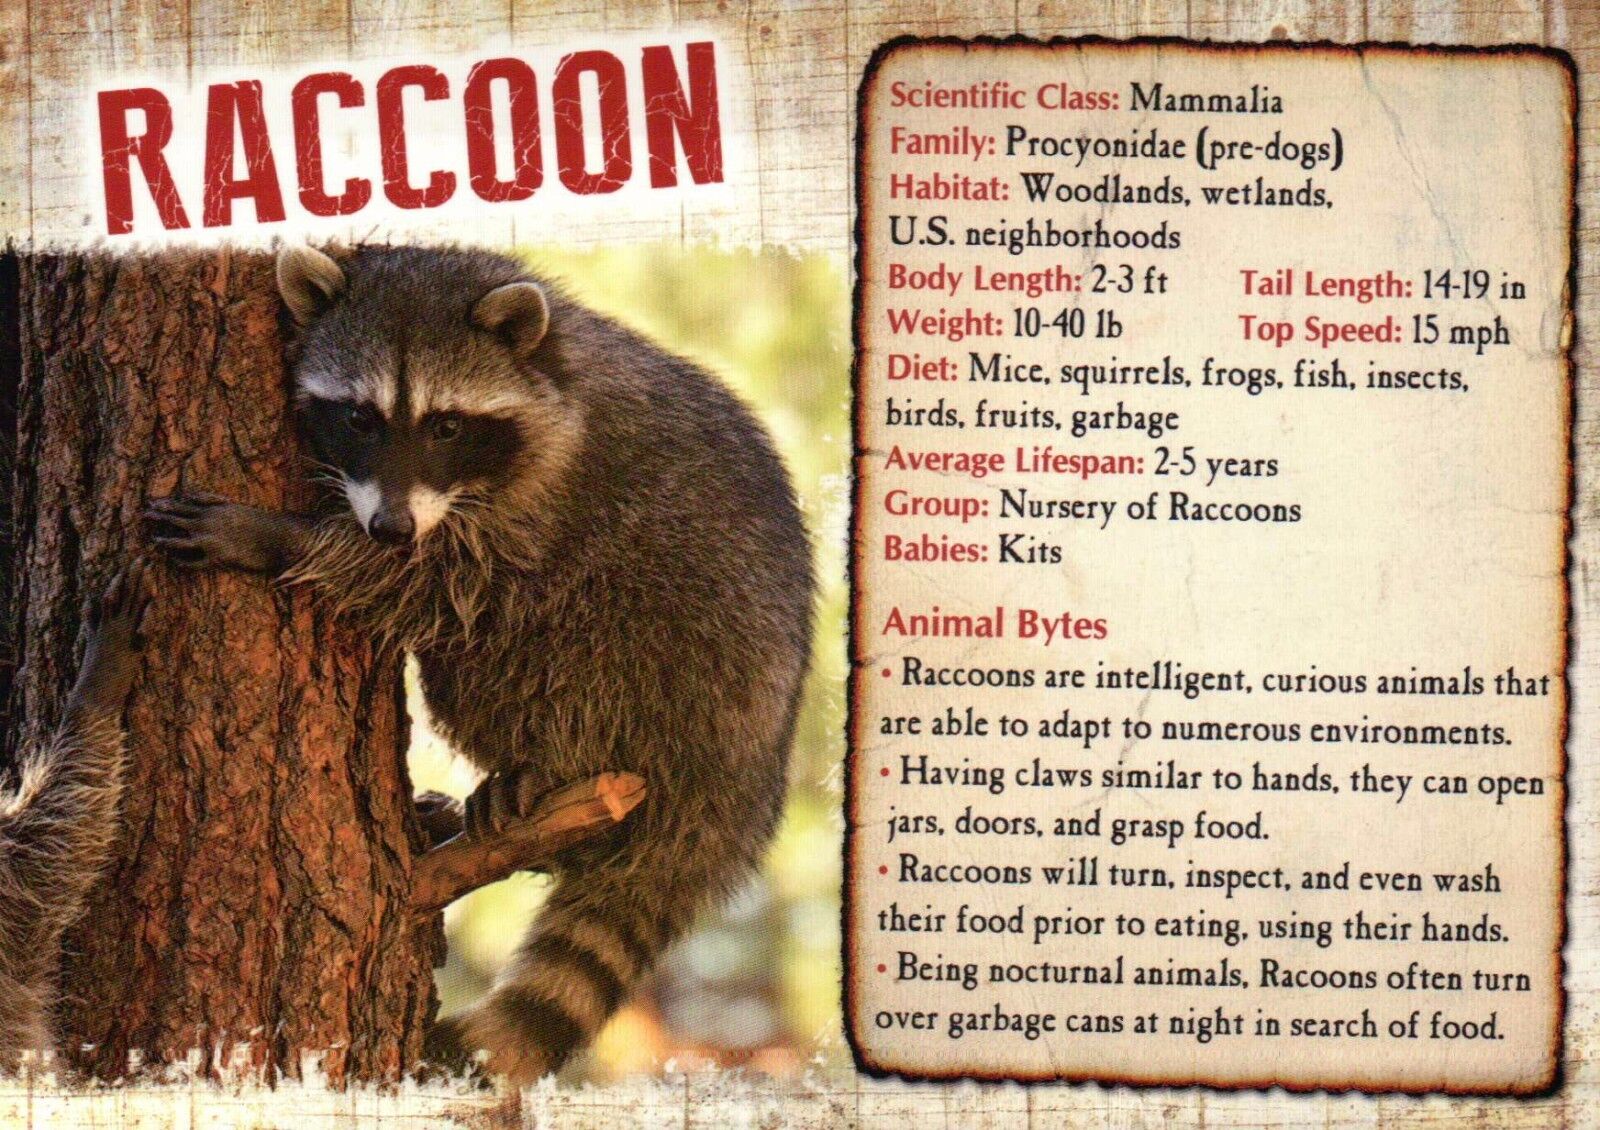 Raccoon, Mammal, United States Woods Wetlands etc. - Animal Information Postcard